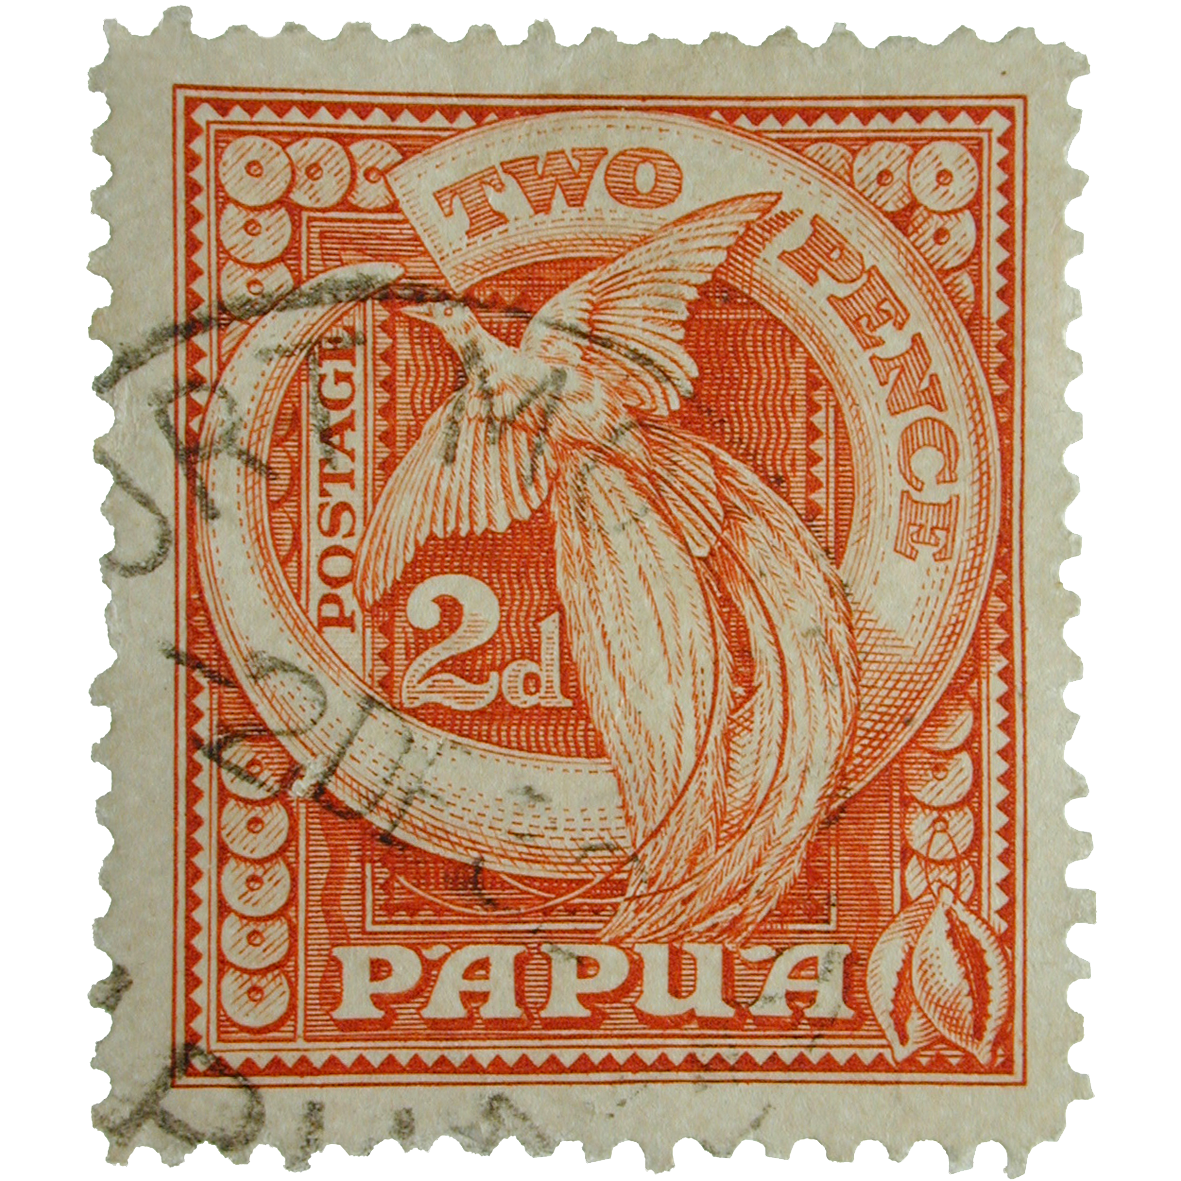 Indonesien, Papua, Briefmarke 2 Pence, 1952 (obverse)